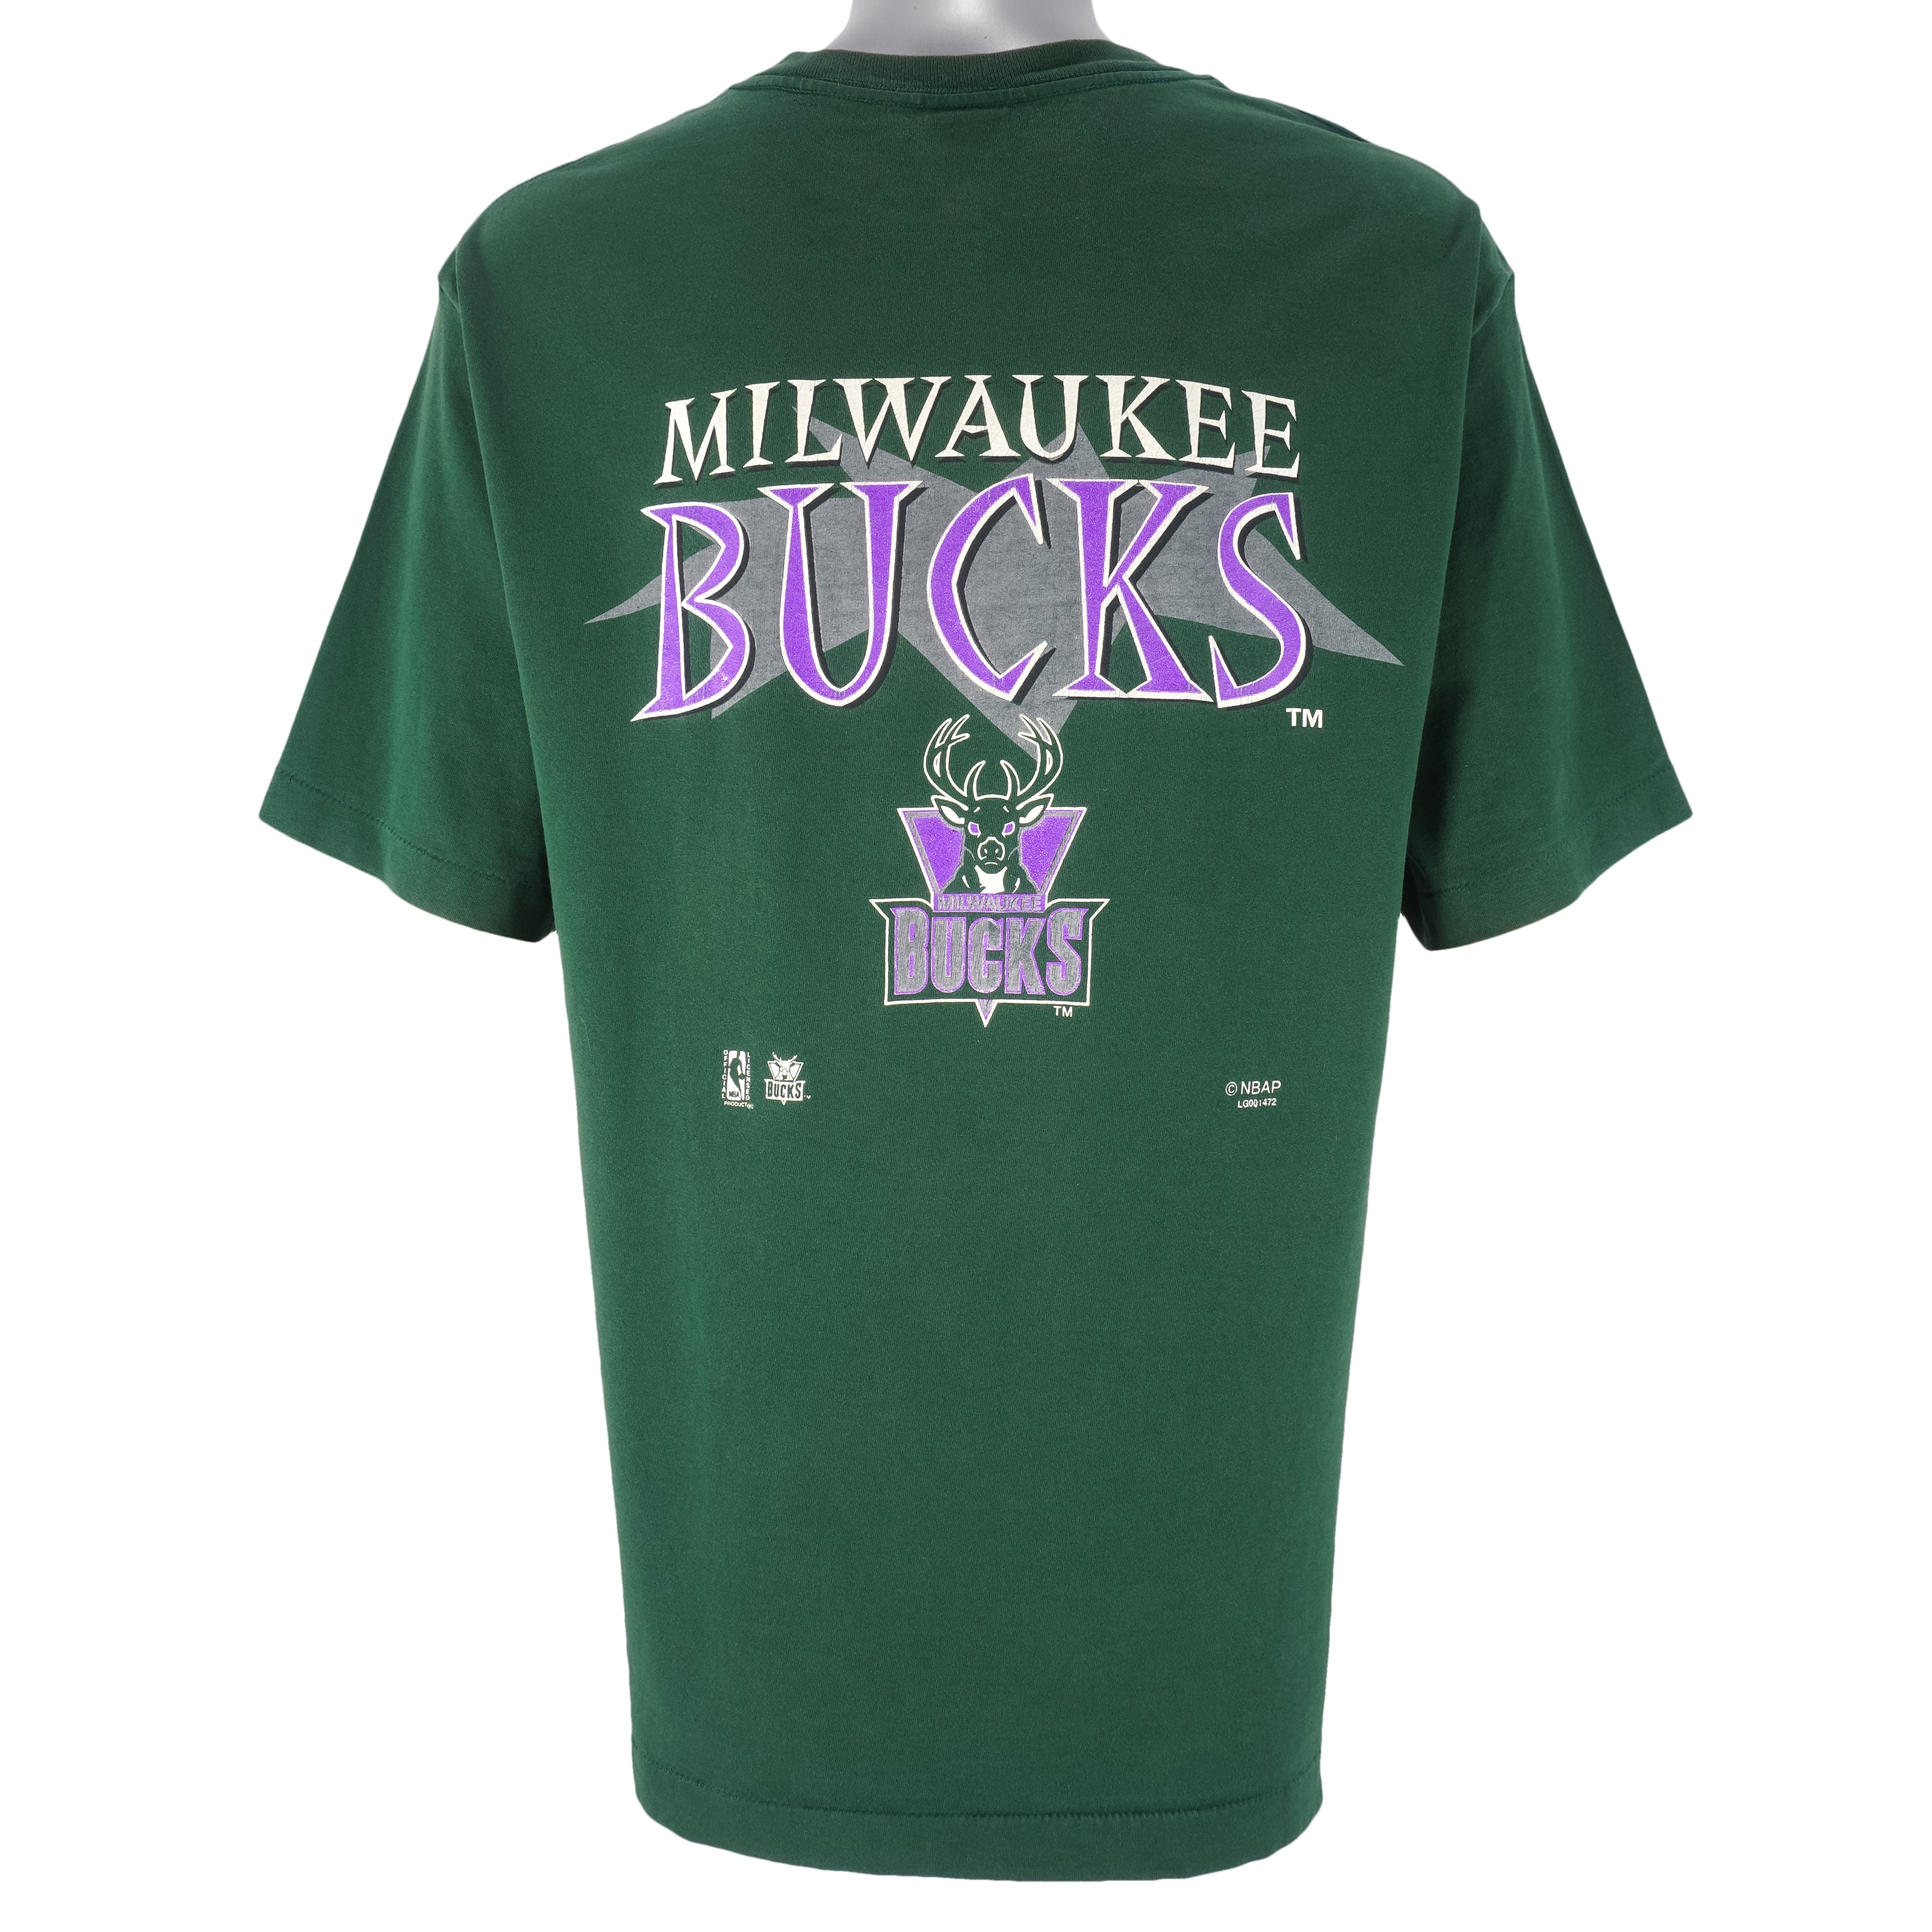 Official Milwaukee Bucks Apparel, Bucks Gear, Milwaukee Bucks Store